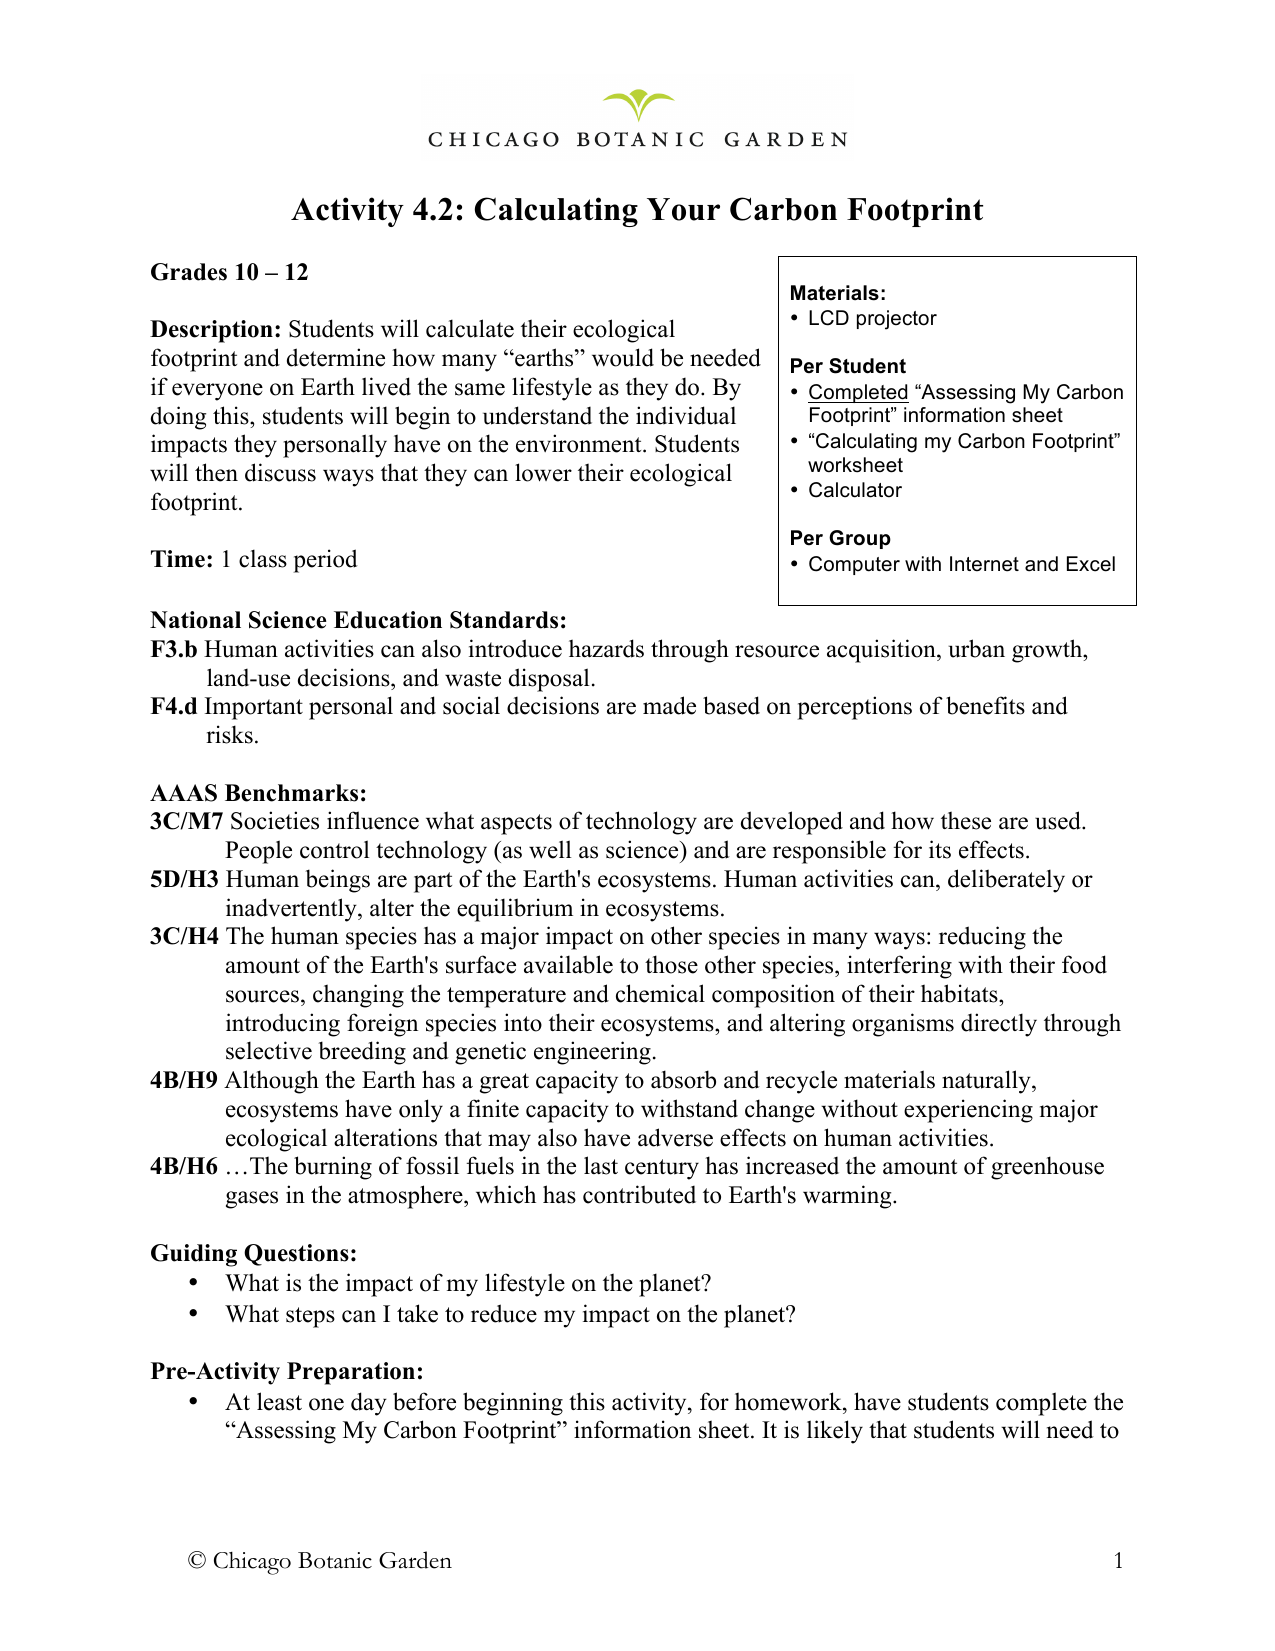 Unit 2222 Grades 2222-2222 Activity 2222.22 CalculatingYourCarbonFootprint Regarding Ecological Footprint Calculator Worksheet